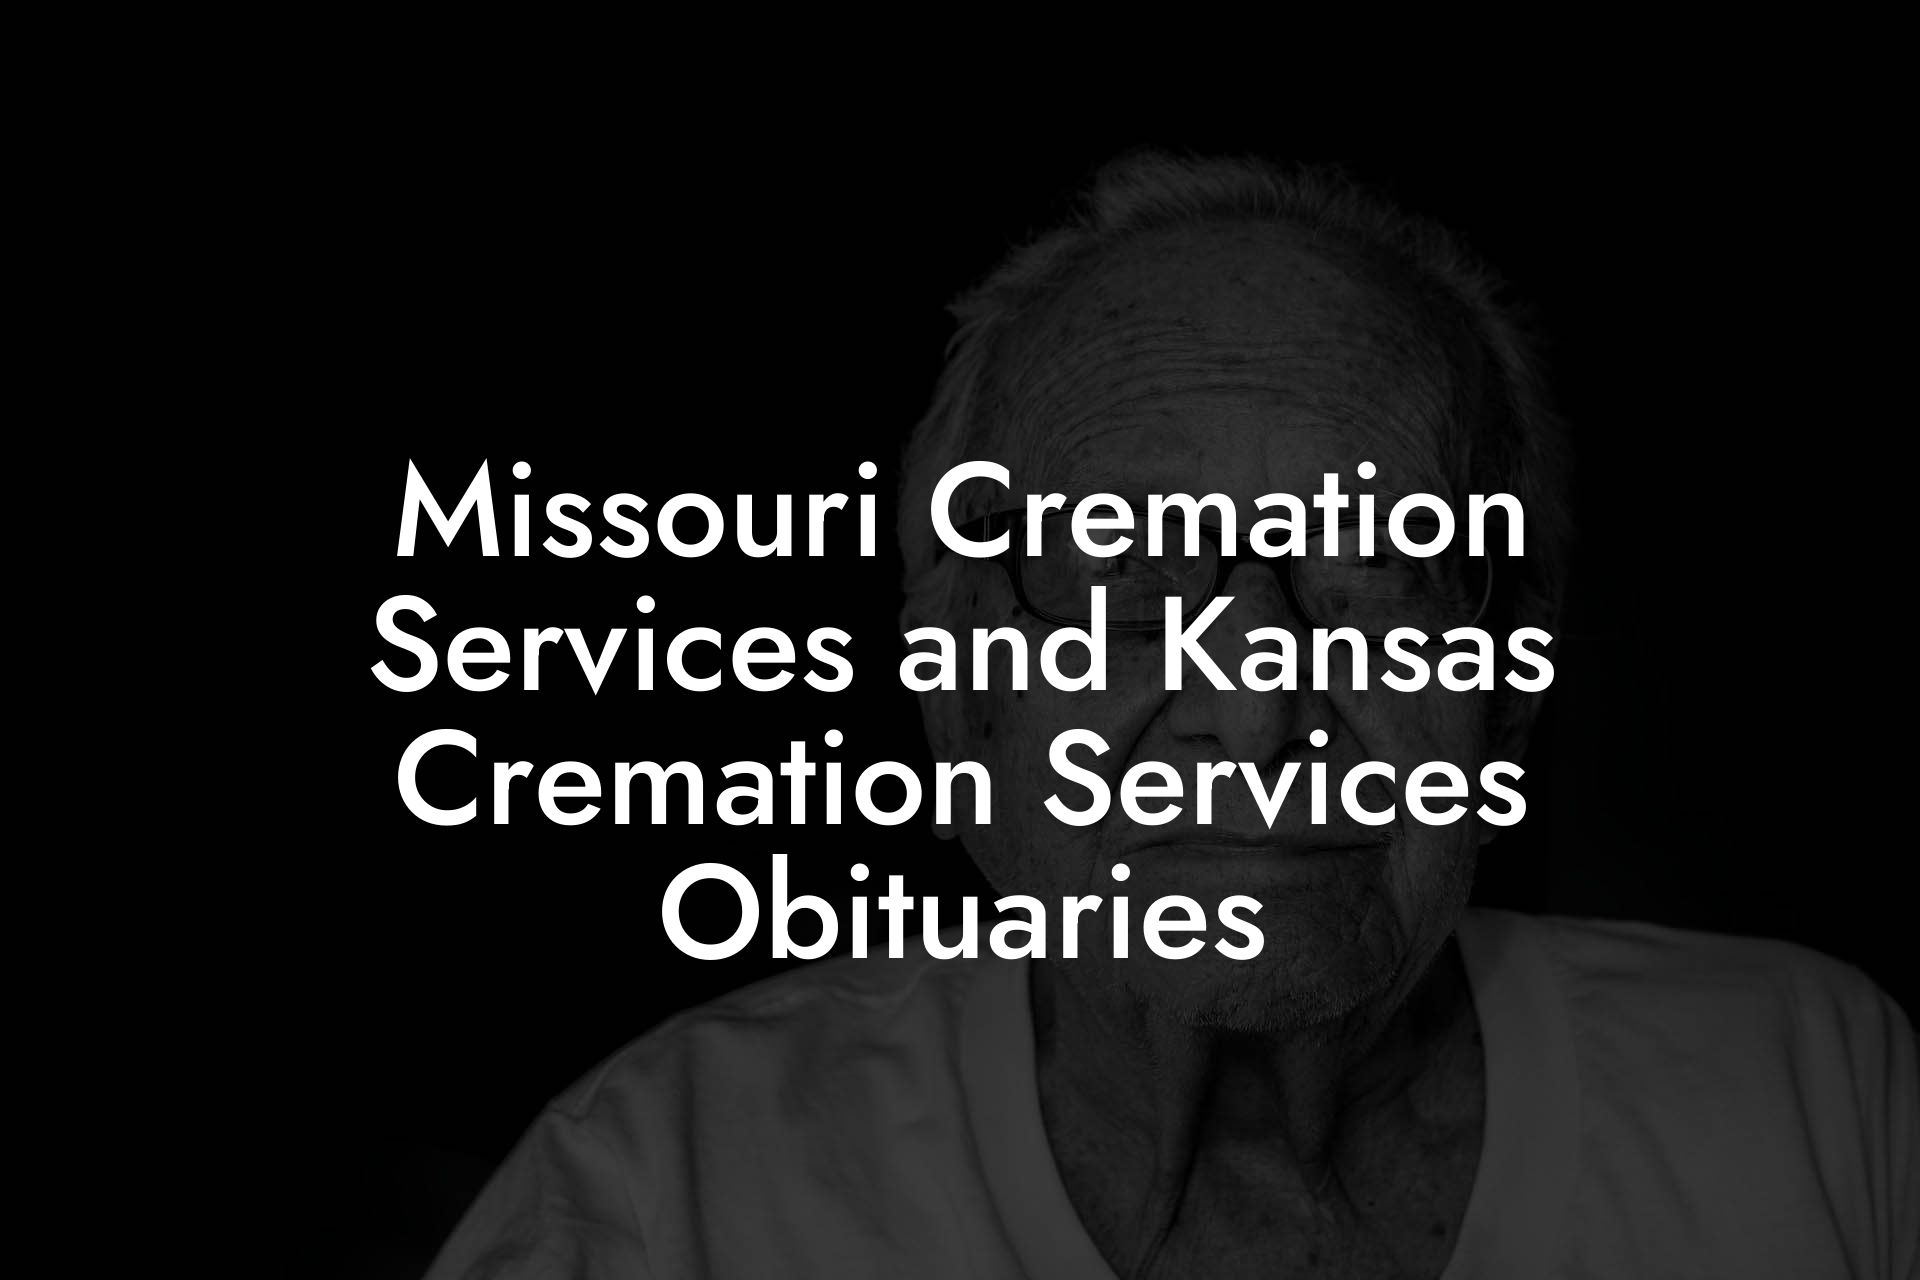 Missouri Cremation Services and Kansas Cremation Services Obituaries